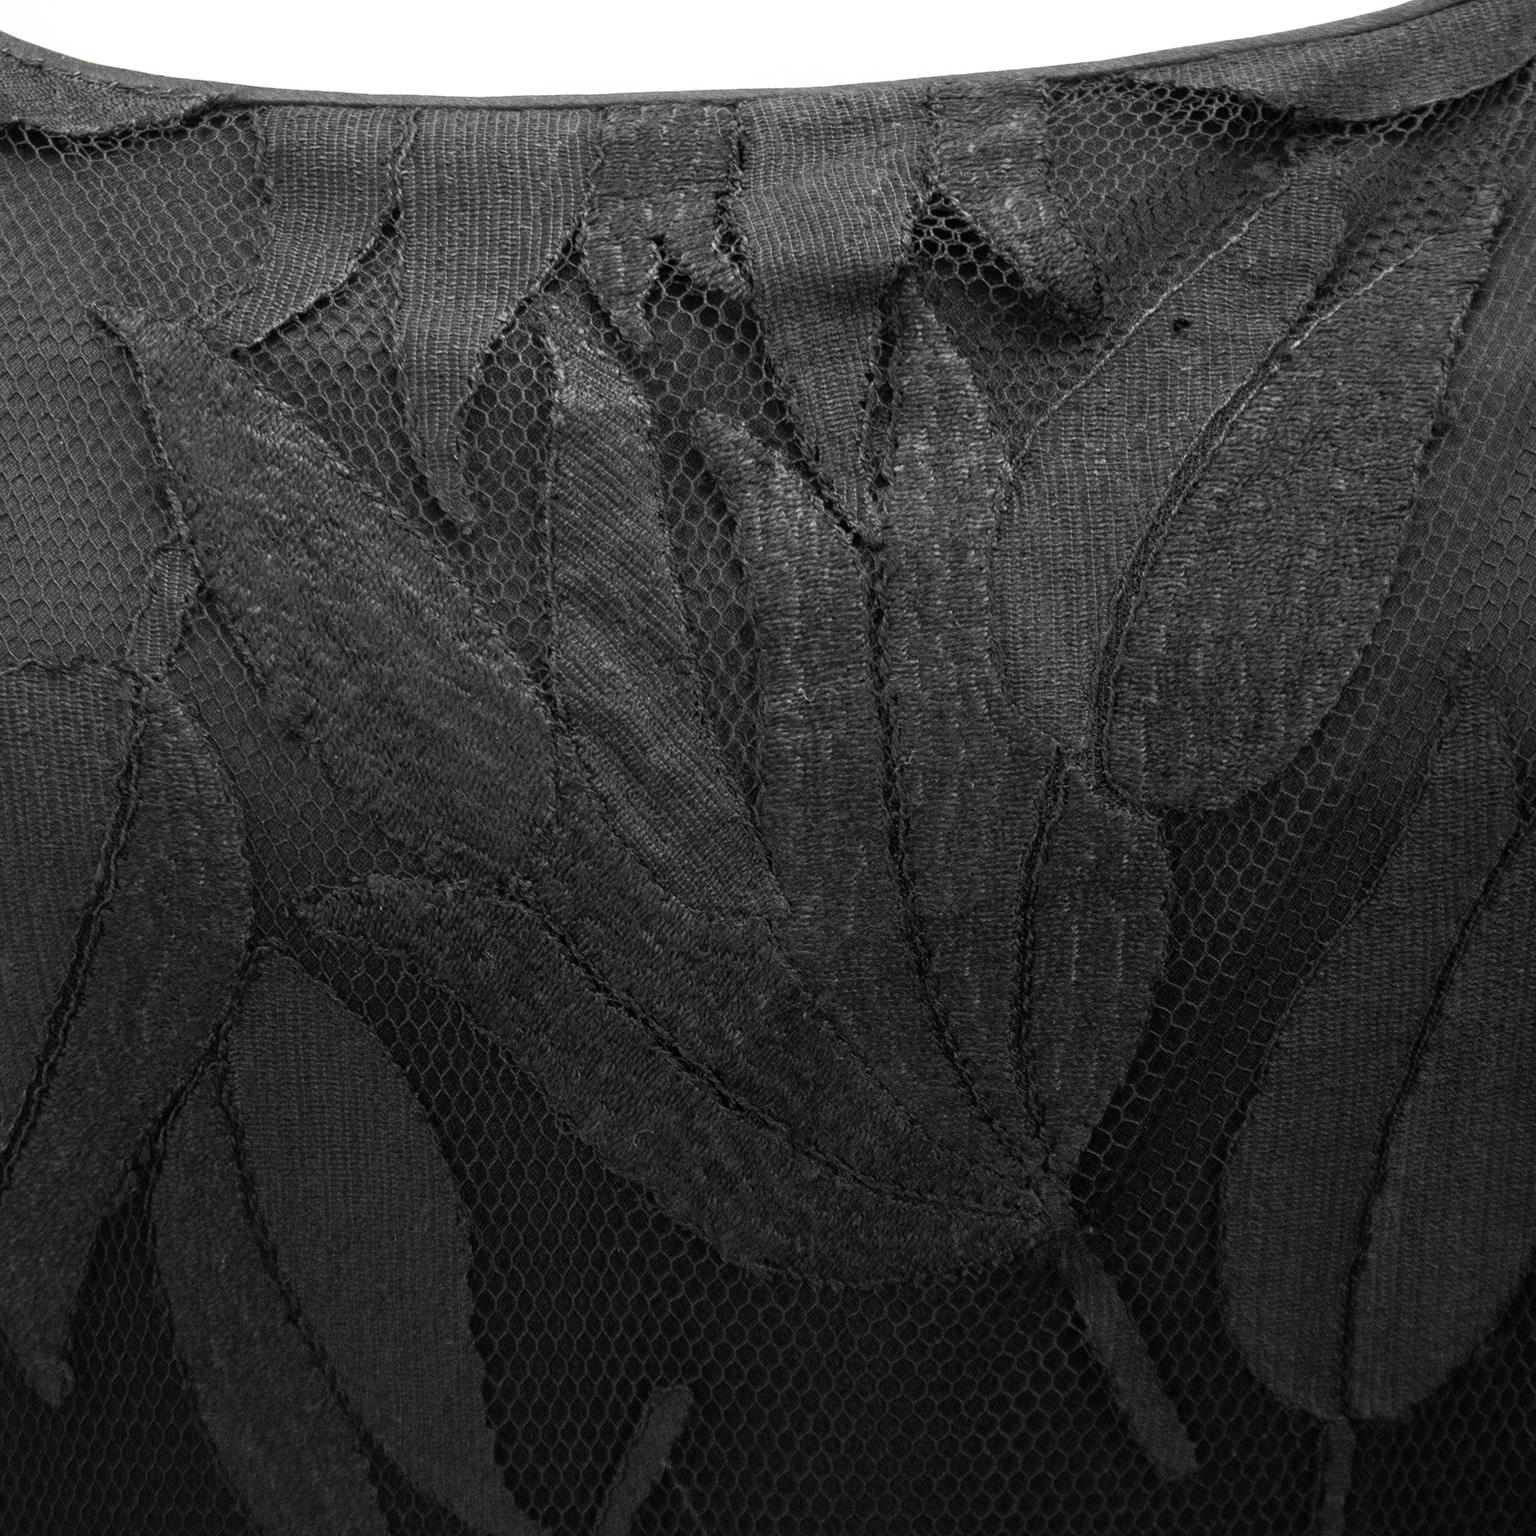 Vintage 1940's Black Net Gown with Floral Motif For Sale 1